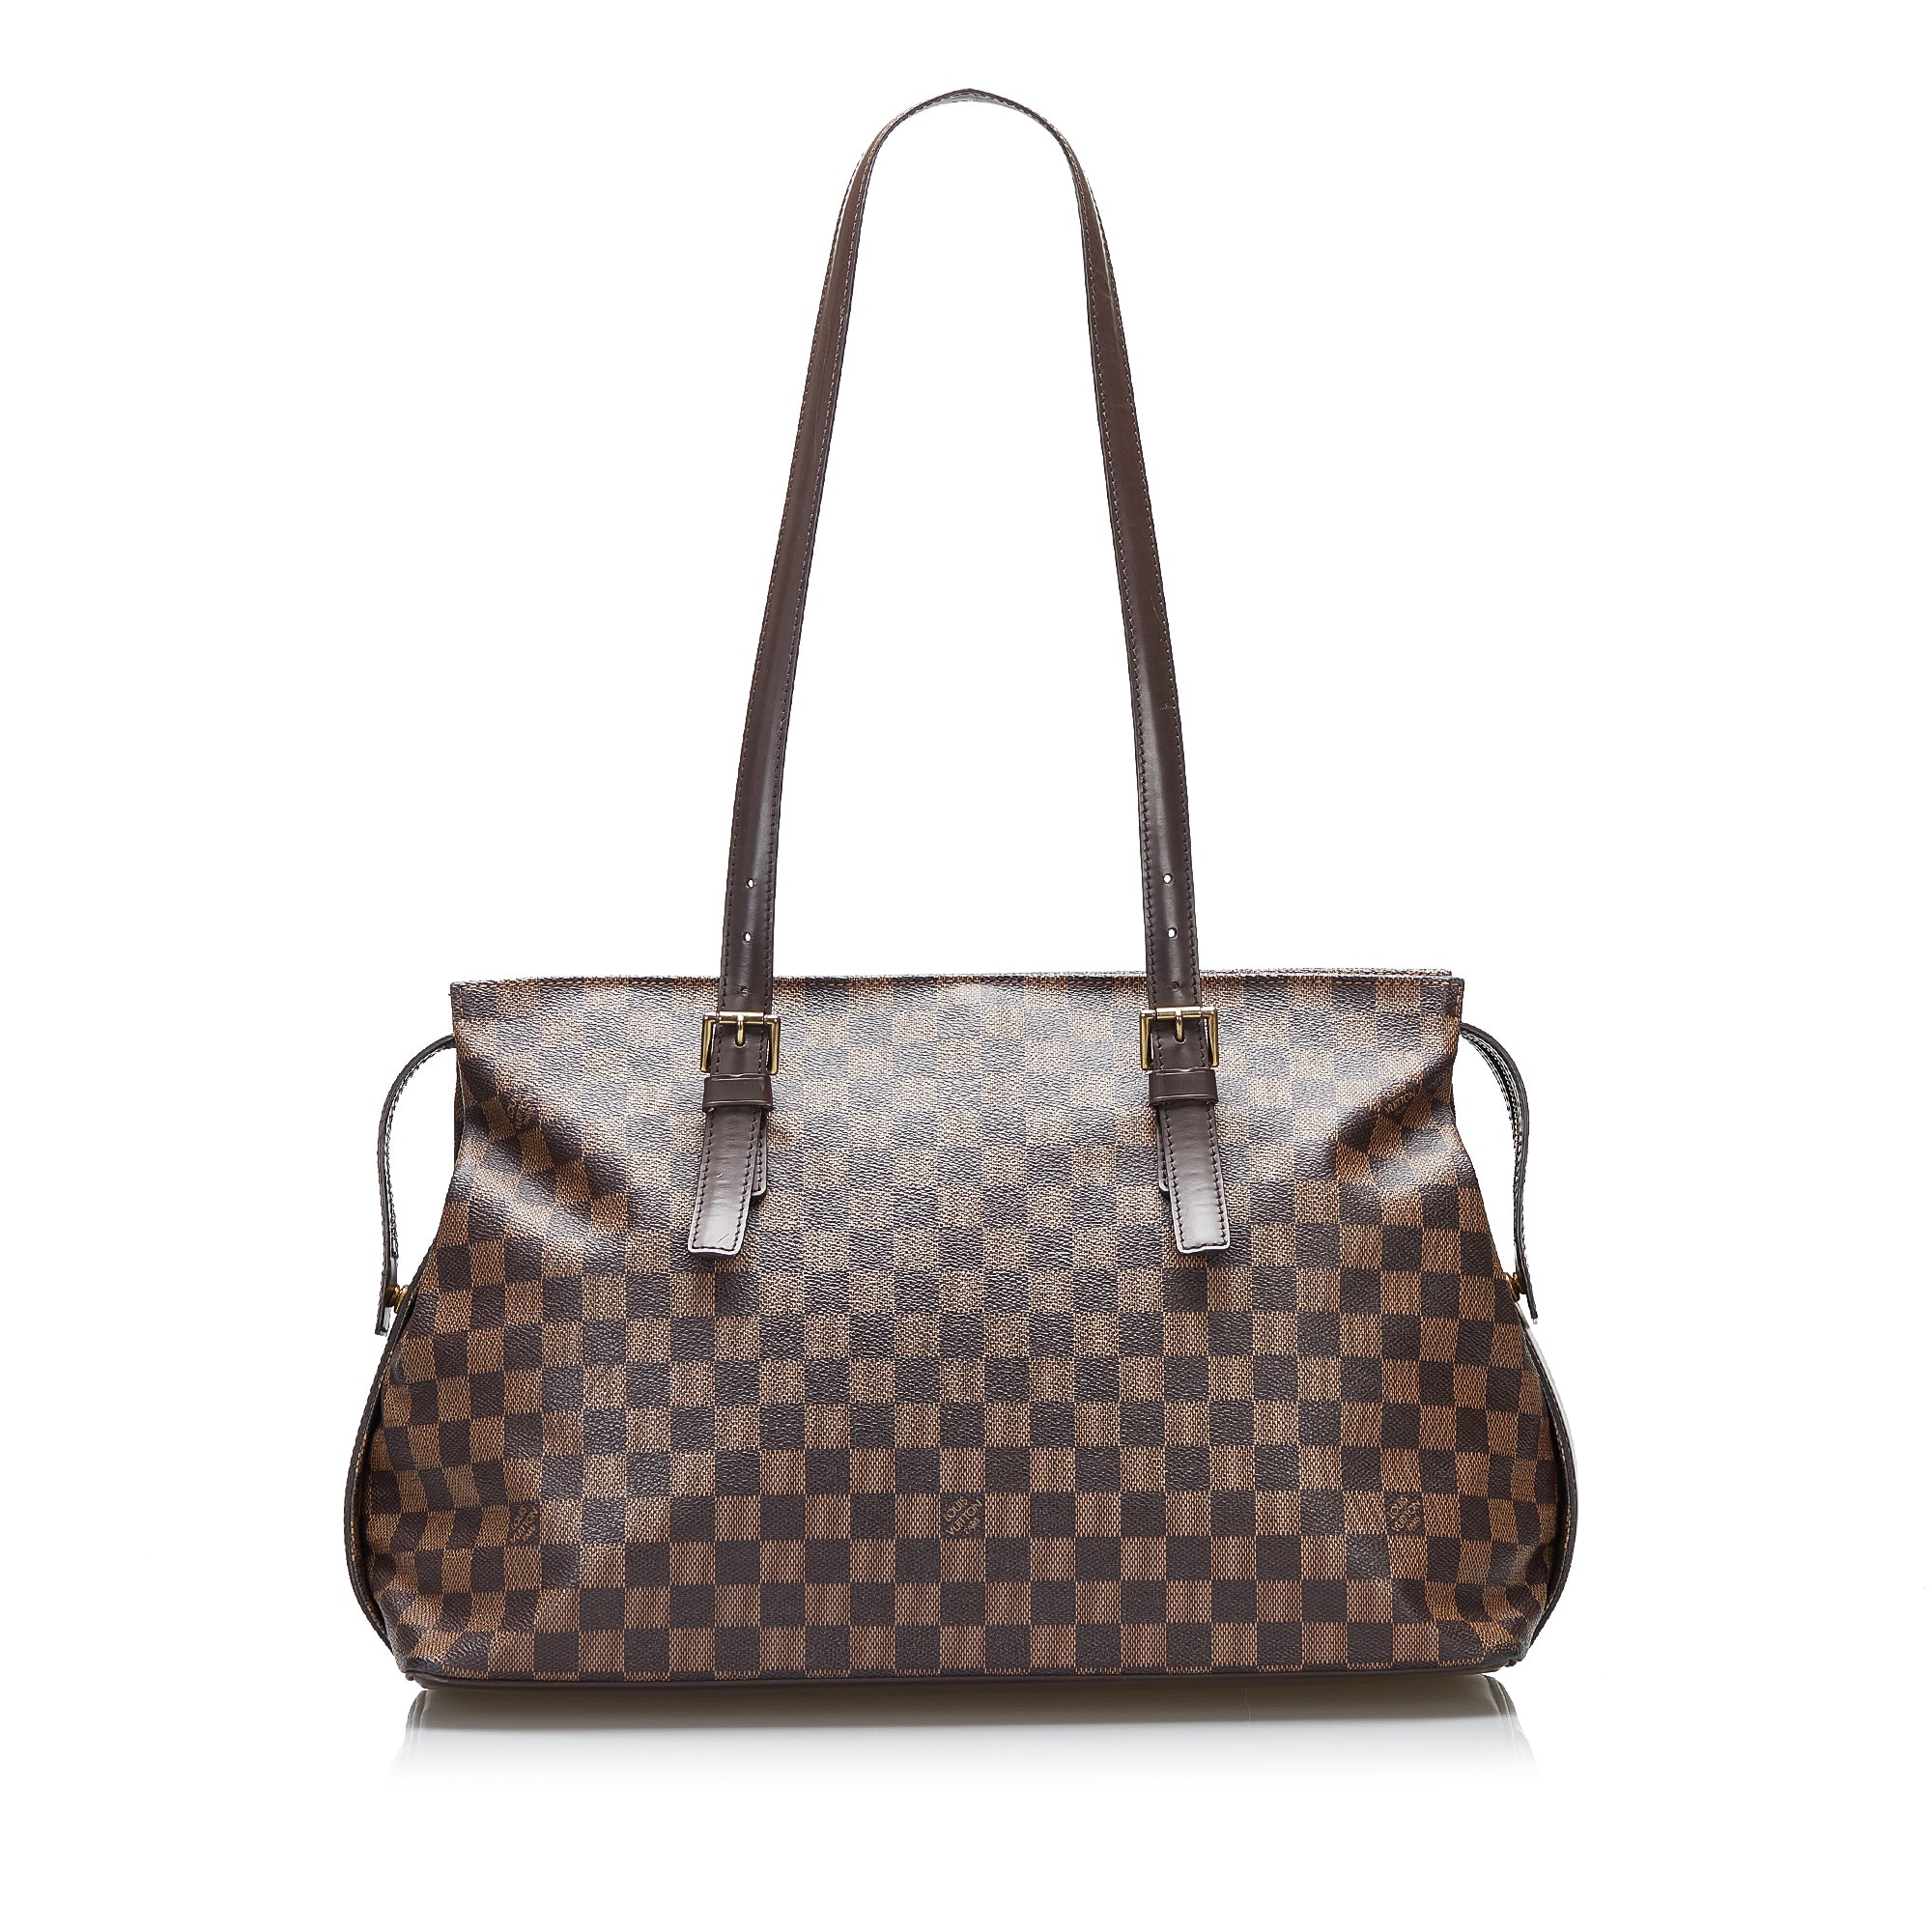 Authentic Louis Vuitton Damier Ebene Chelsea Tote Bag w/ COA Free